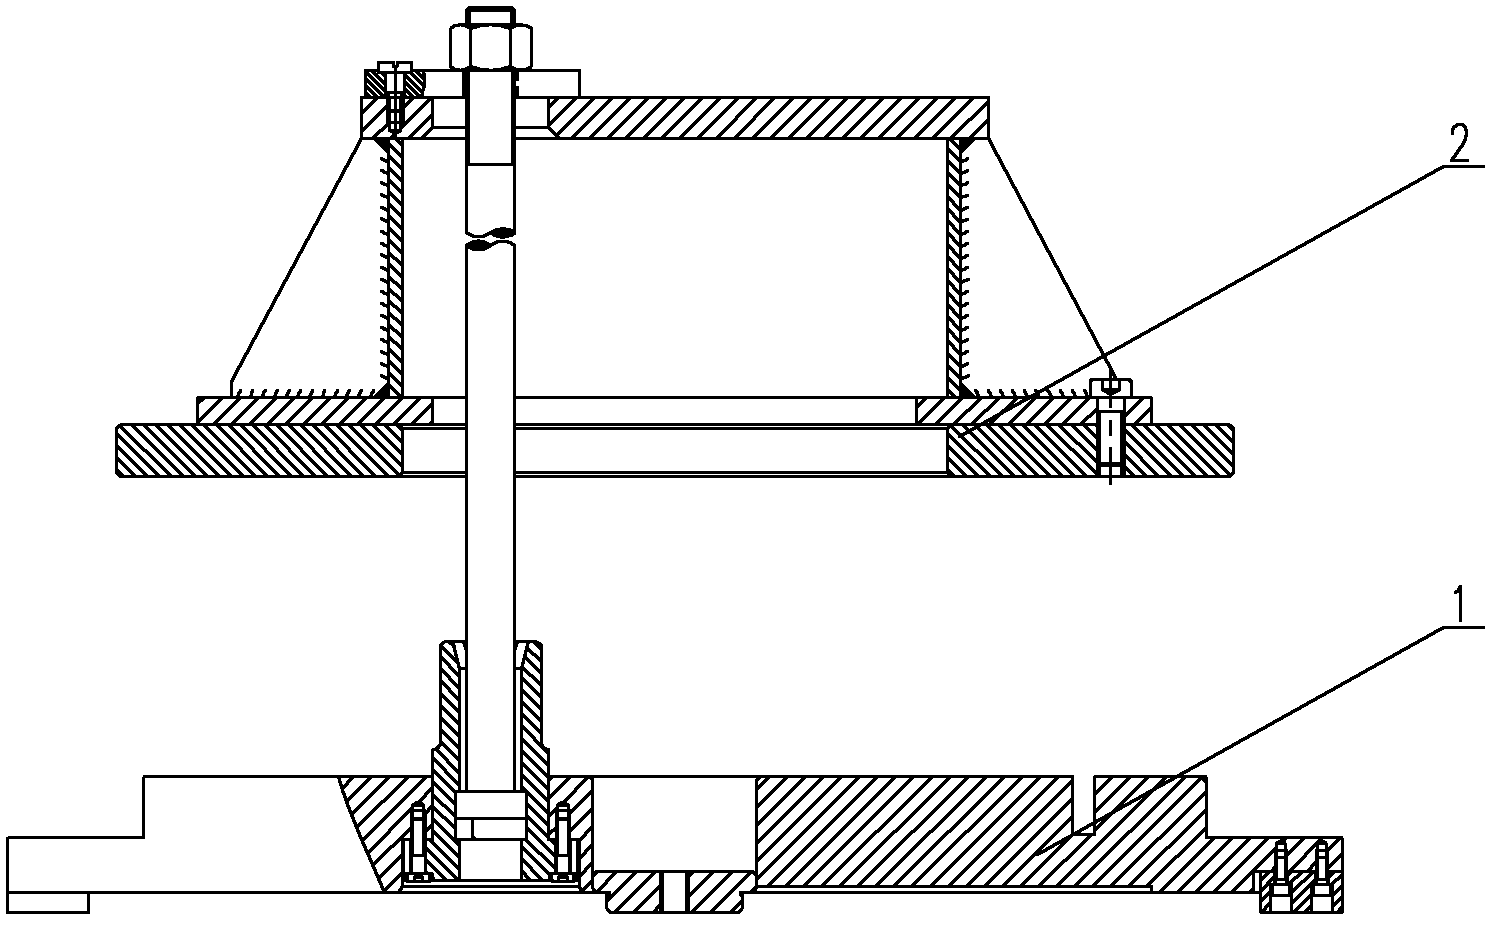 Machine tool fixture